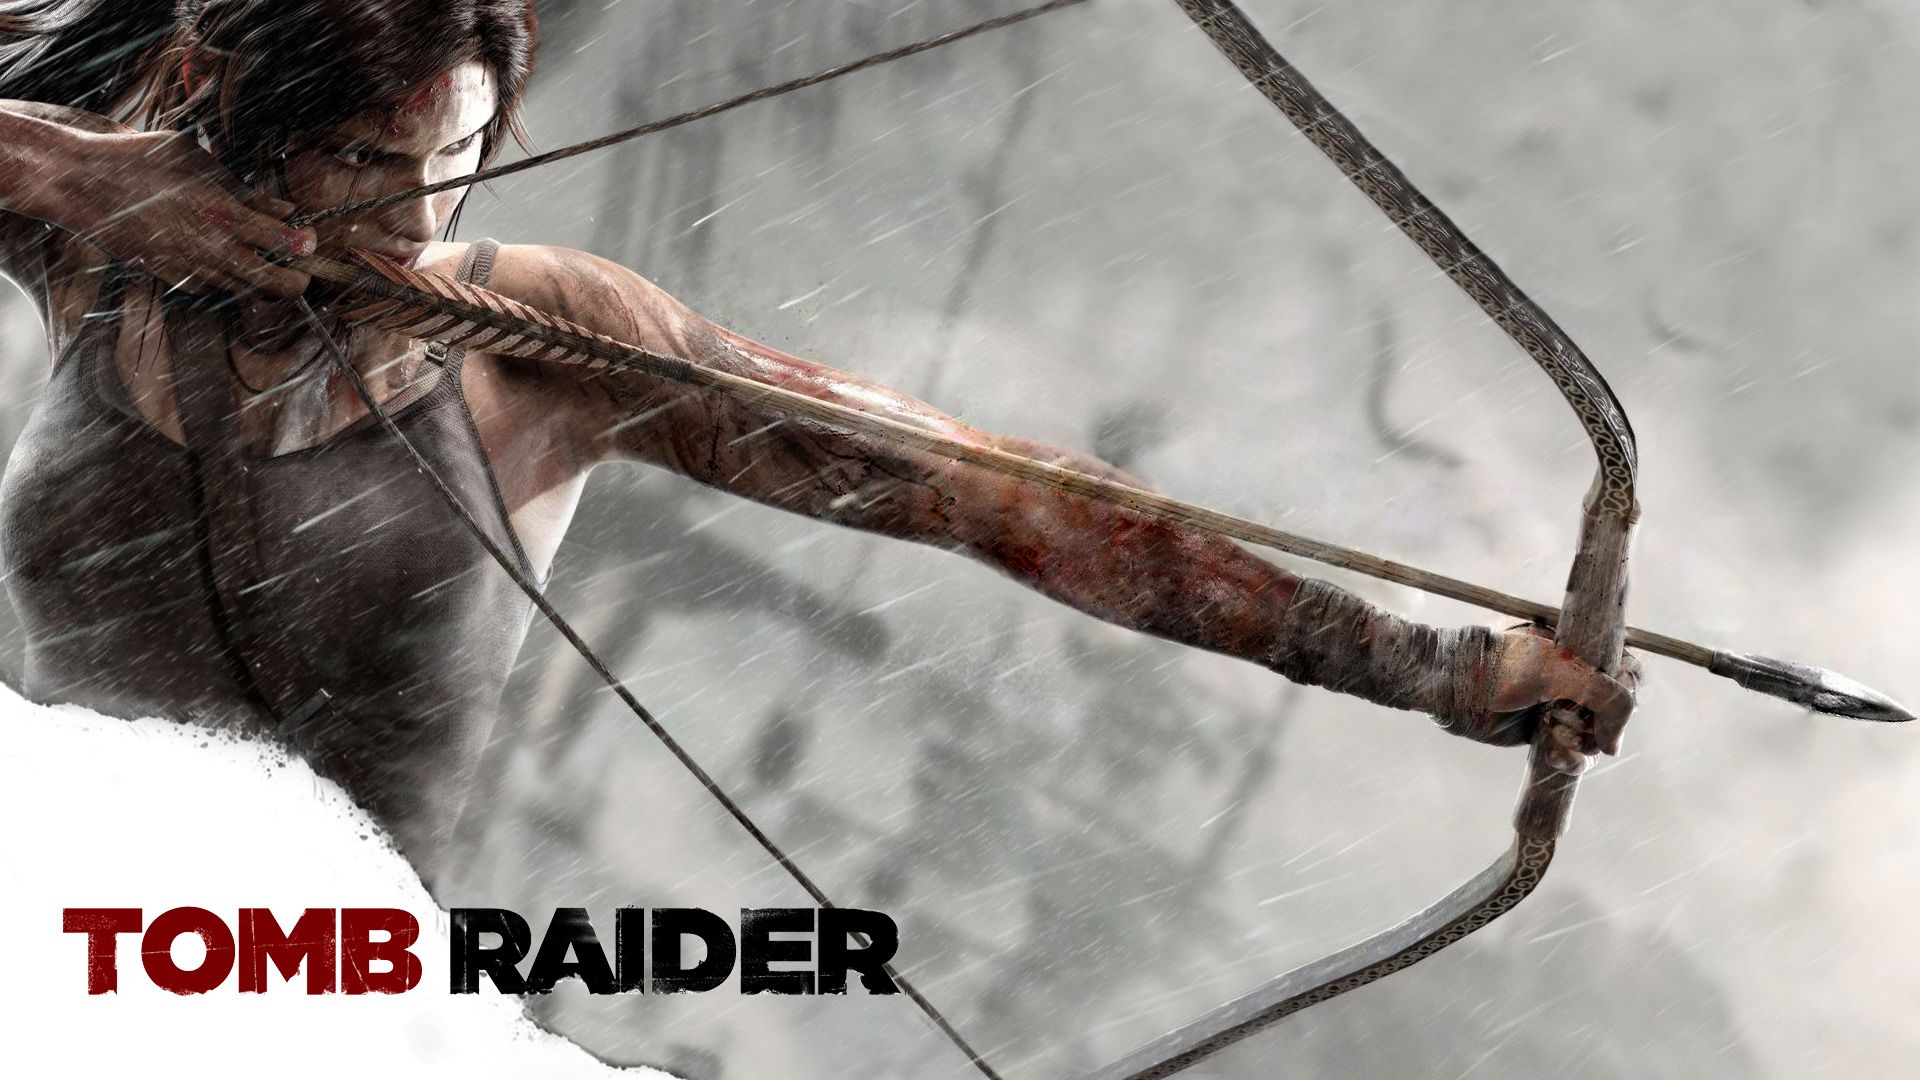 Tomb Raider 2013 HD Wallpaper, Tomb Raider 2013 Images, New Wallpapers